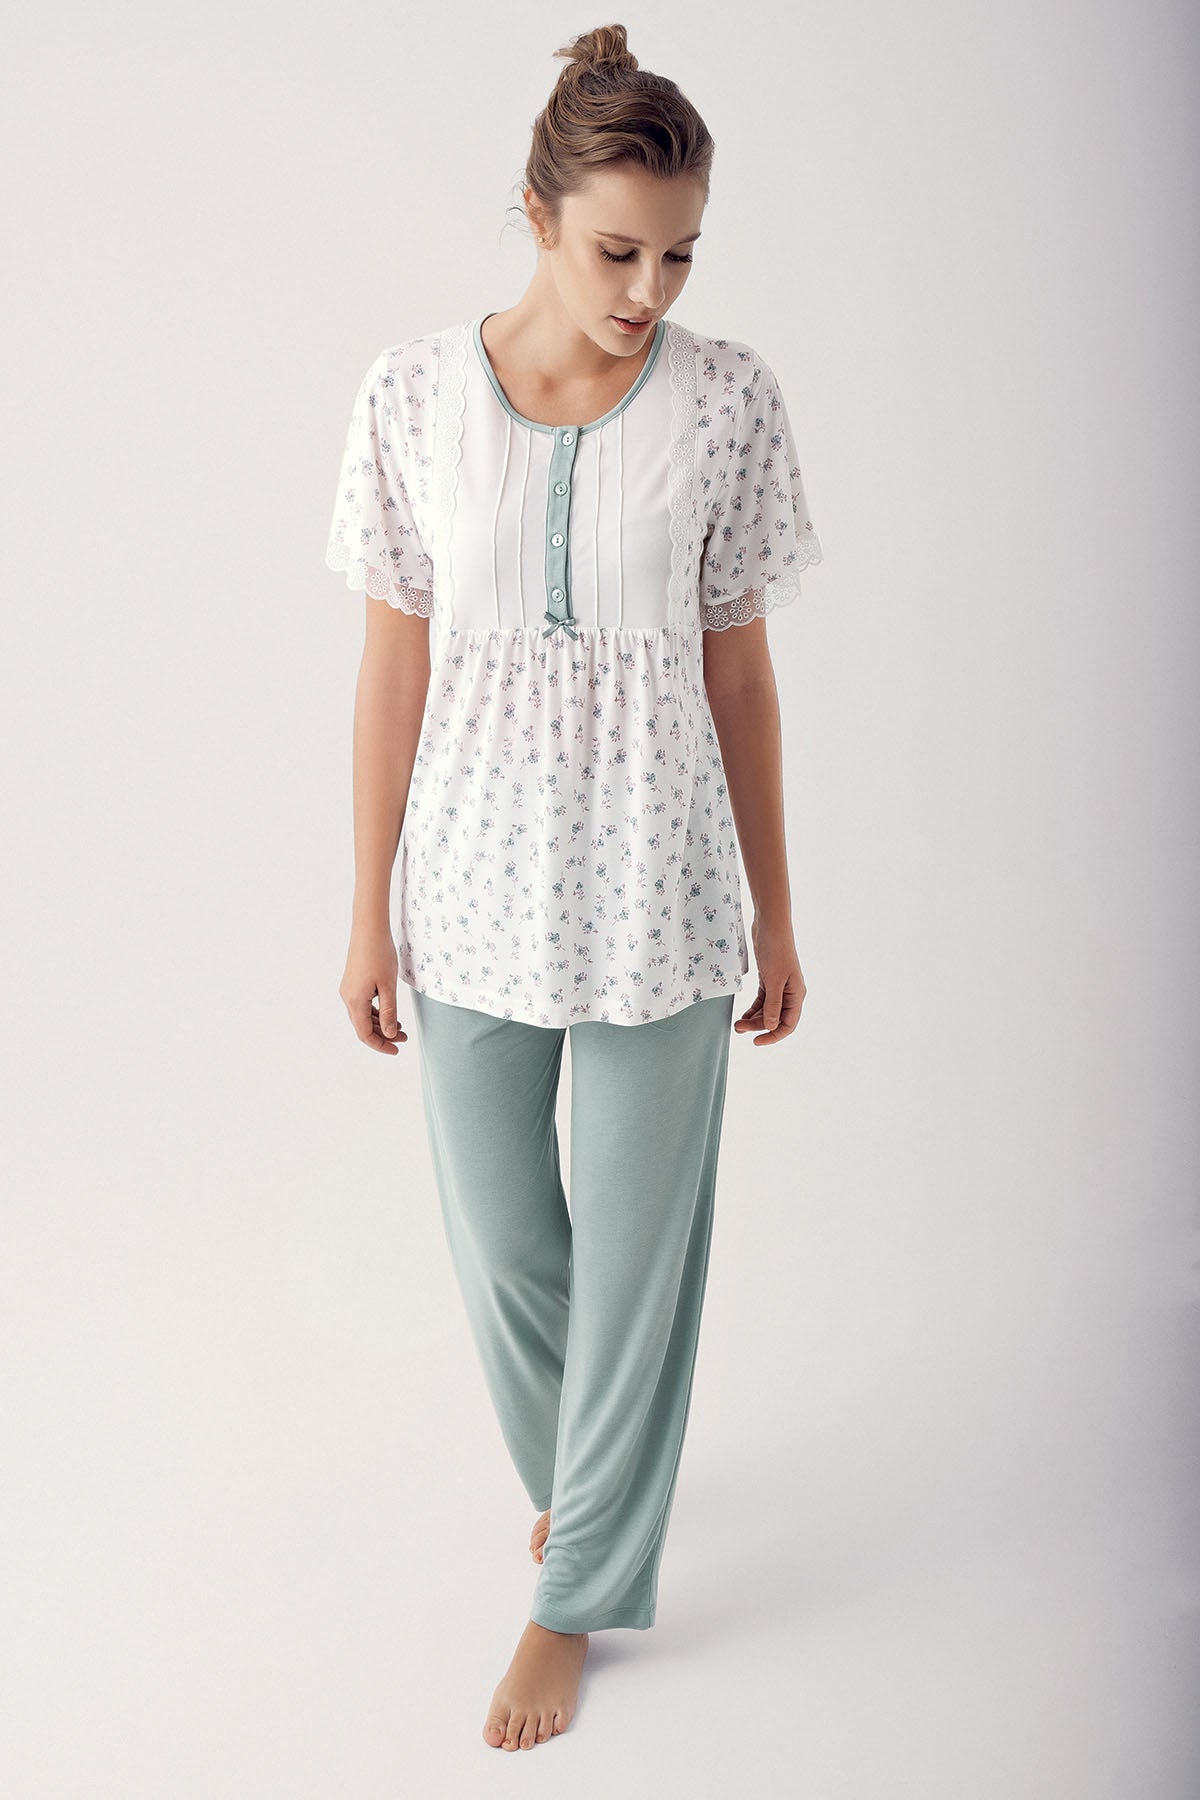 Shopymommy 14201 Flower Pattern Lace Plus Size Maternity & Nursing Pajamas Green